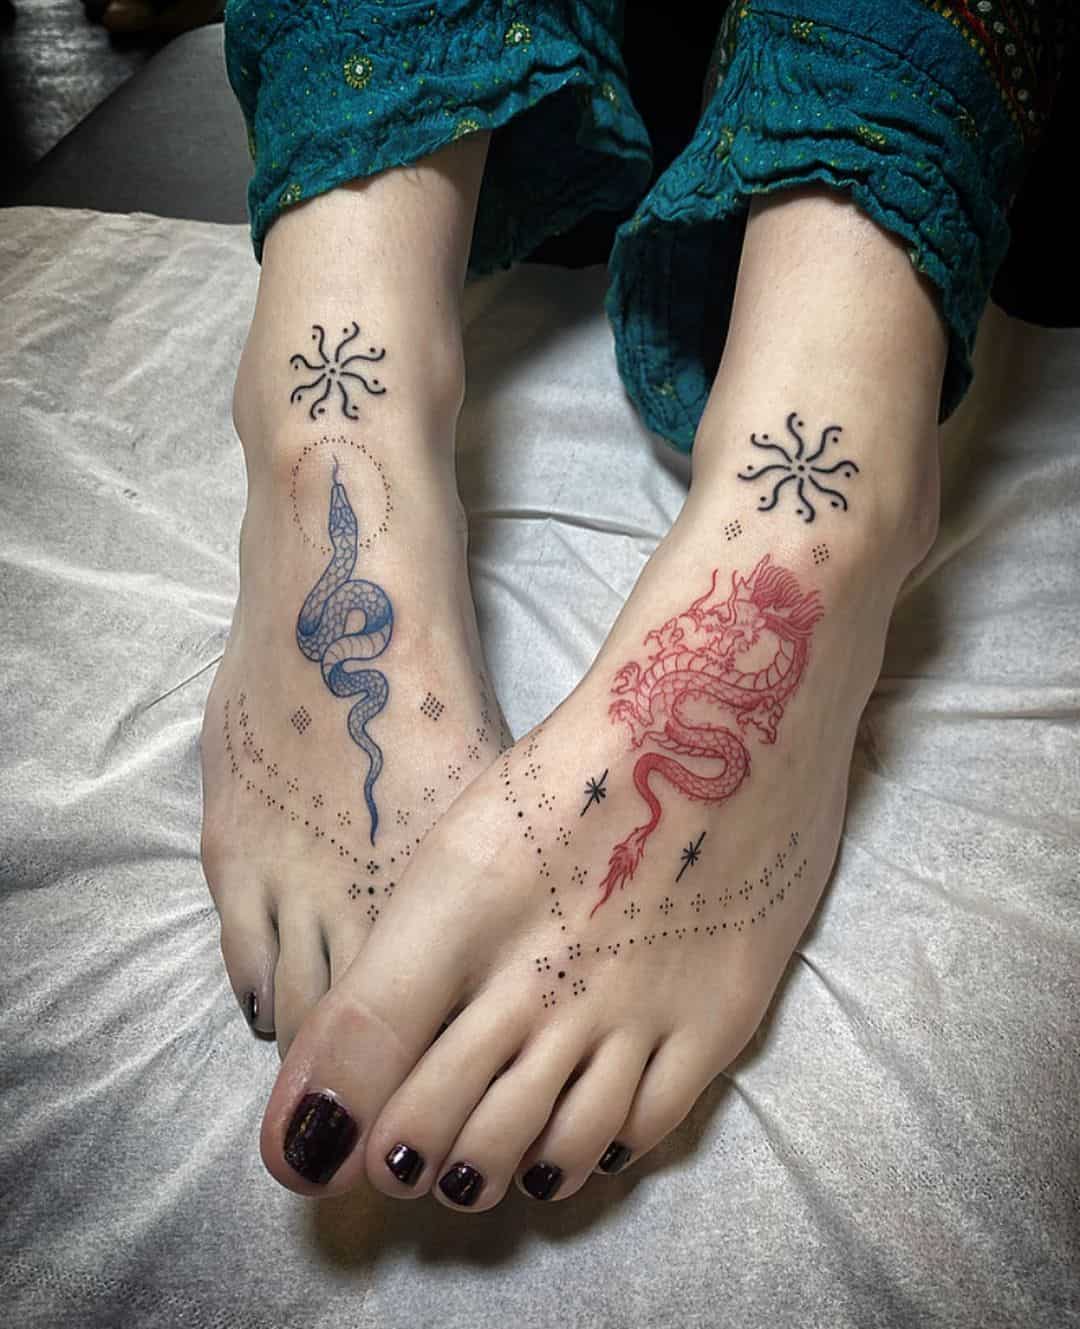 How Long After a Foot Tattoo Can I Wear Socks? - Saved Tattoo